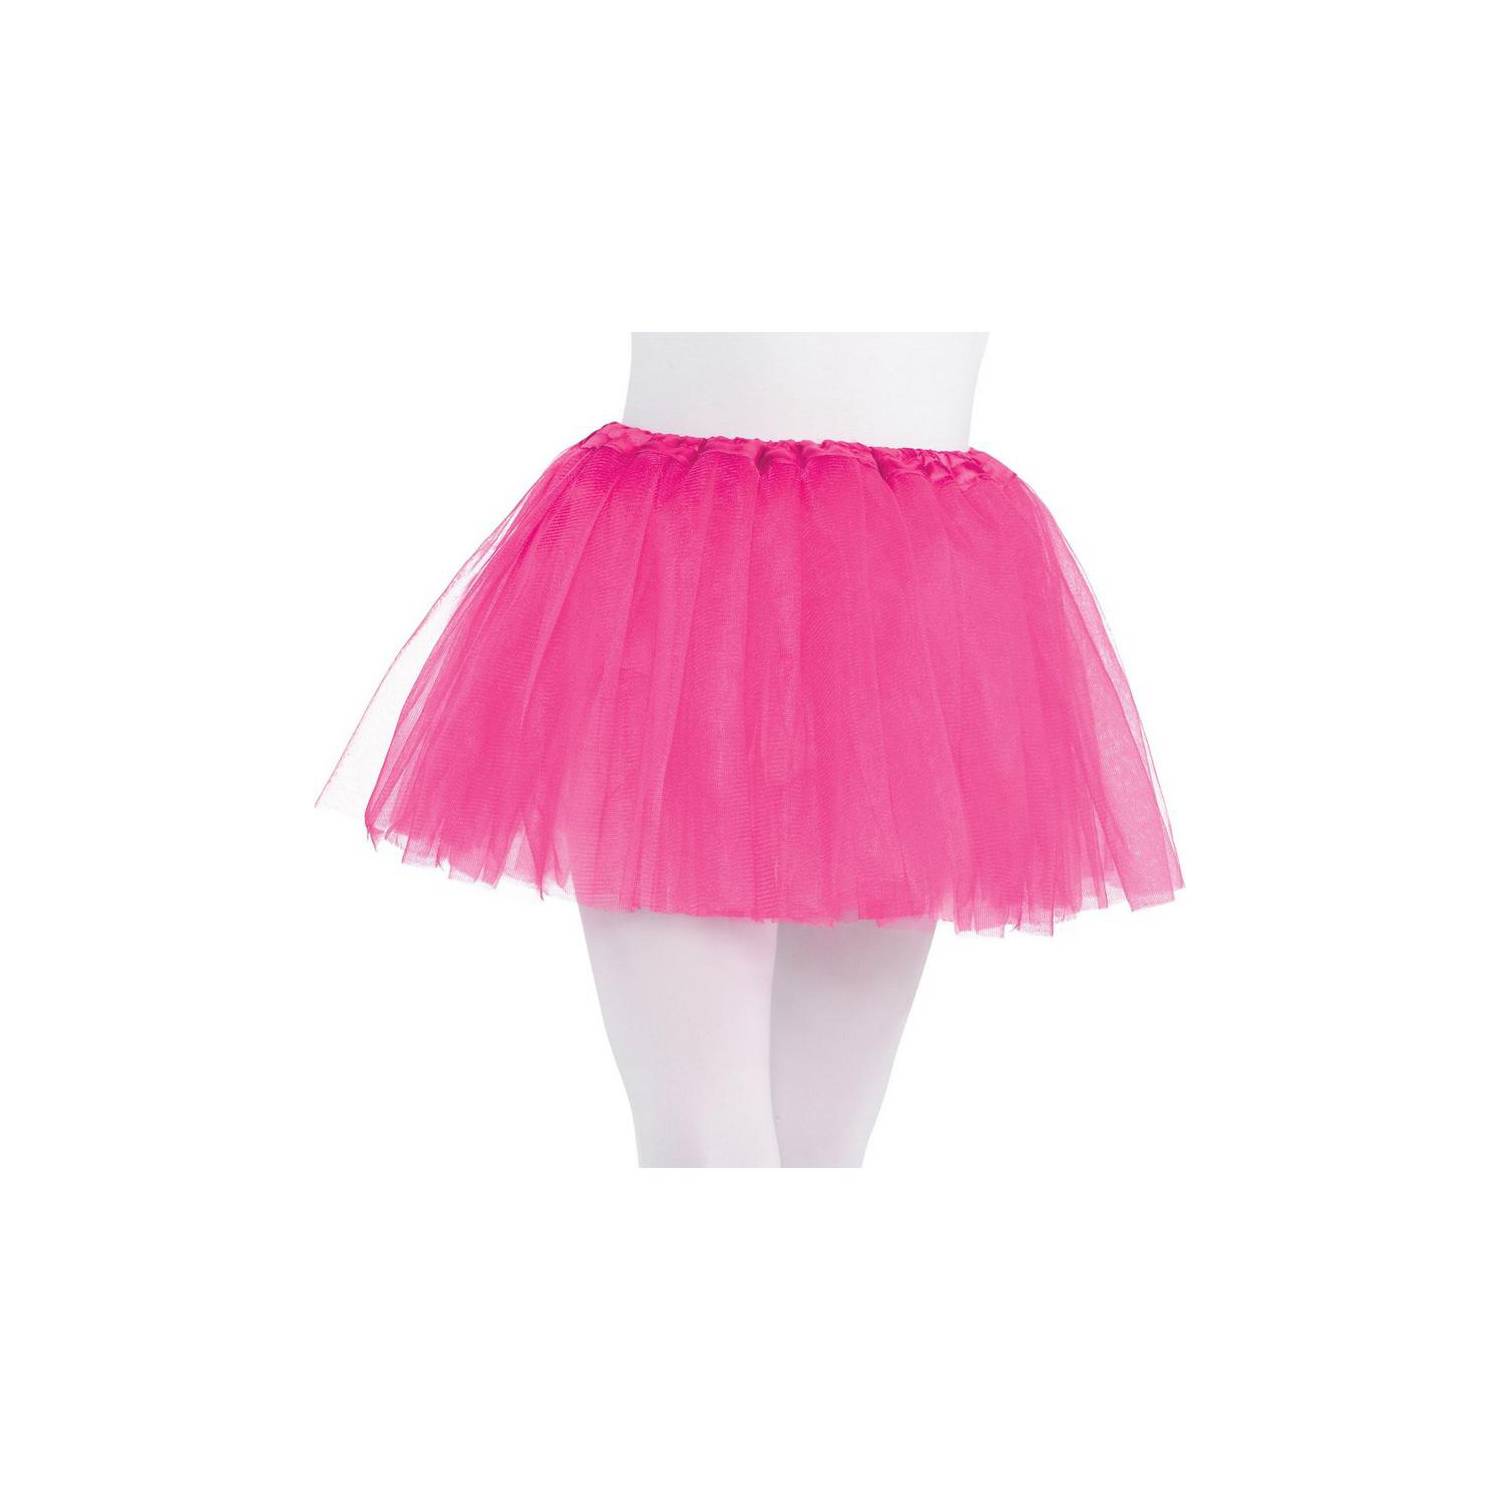 GENERICO tutu falda tul para niñas color rosado